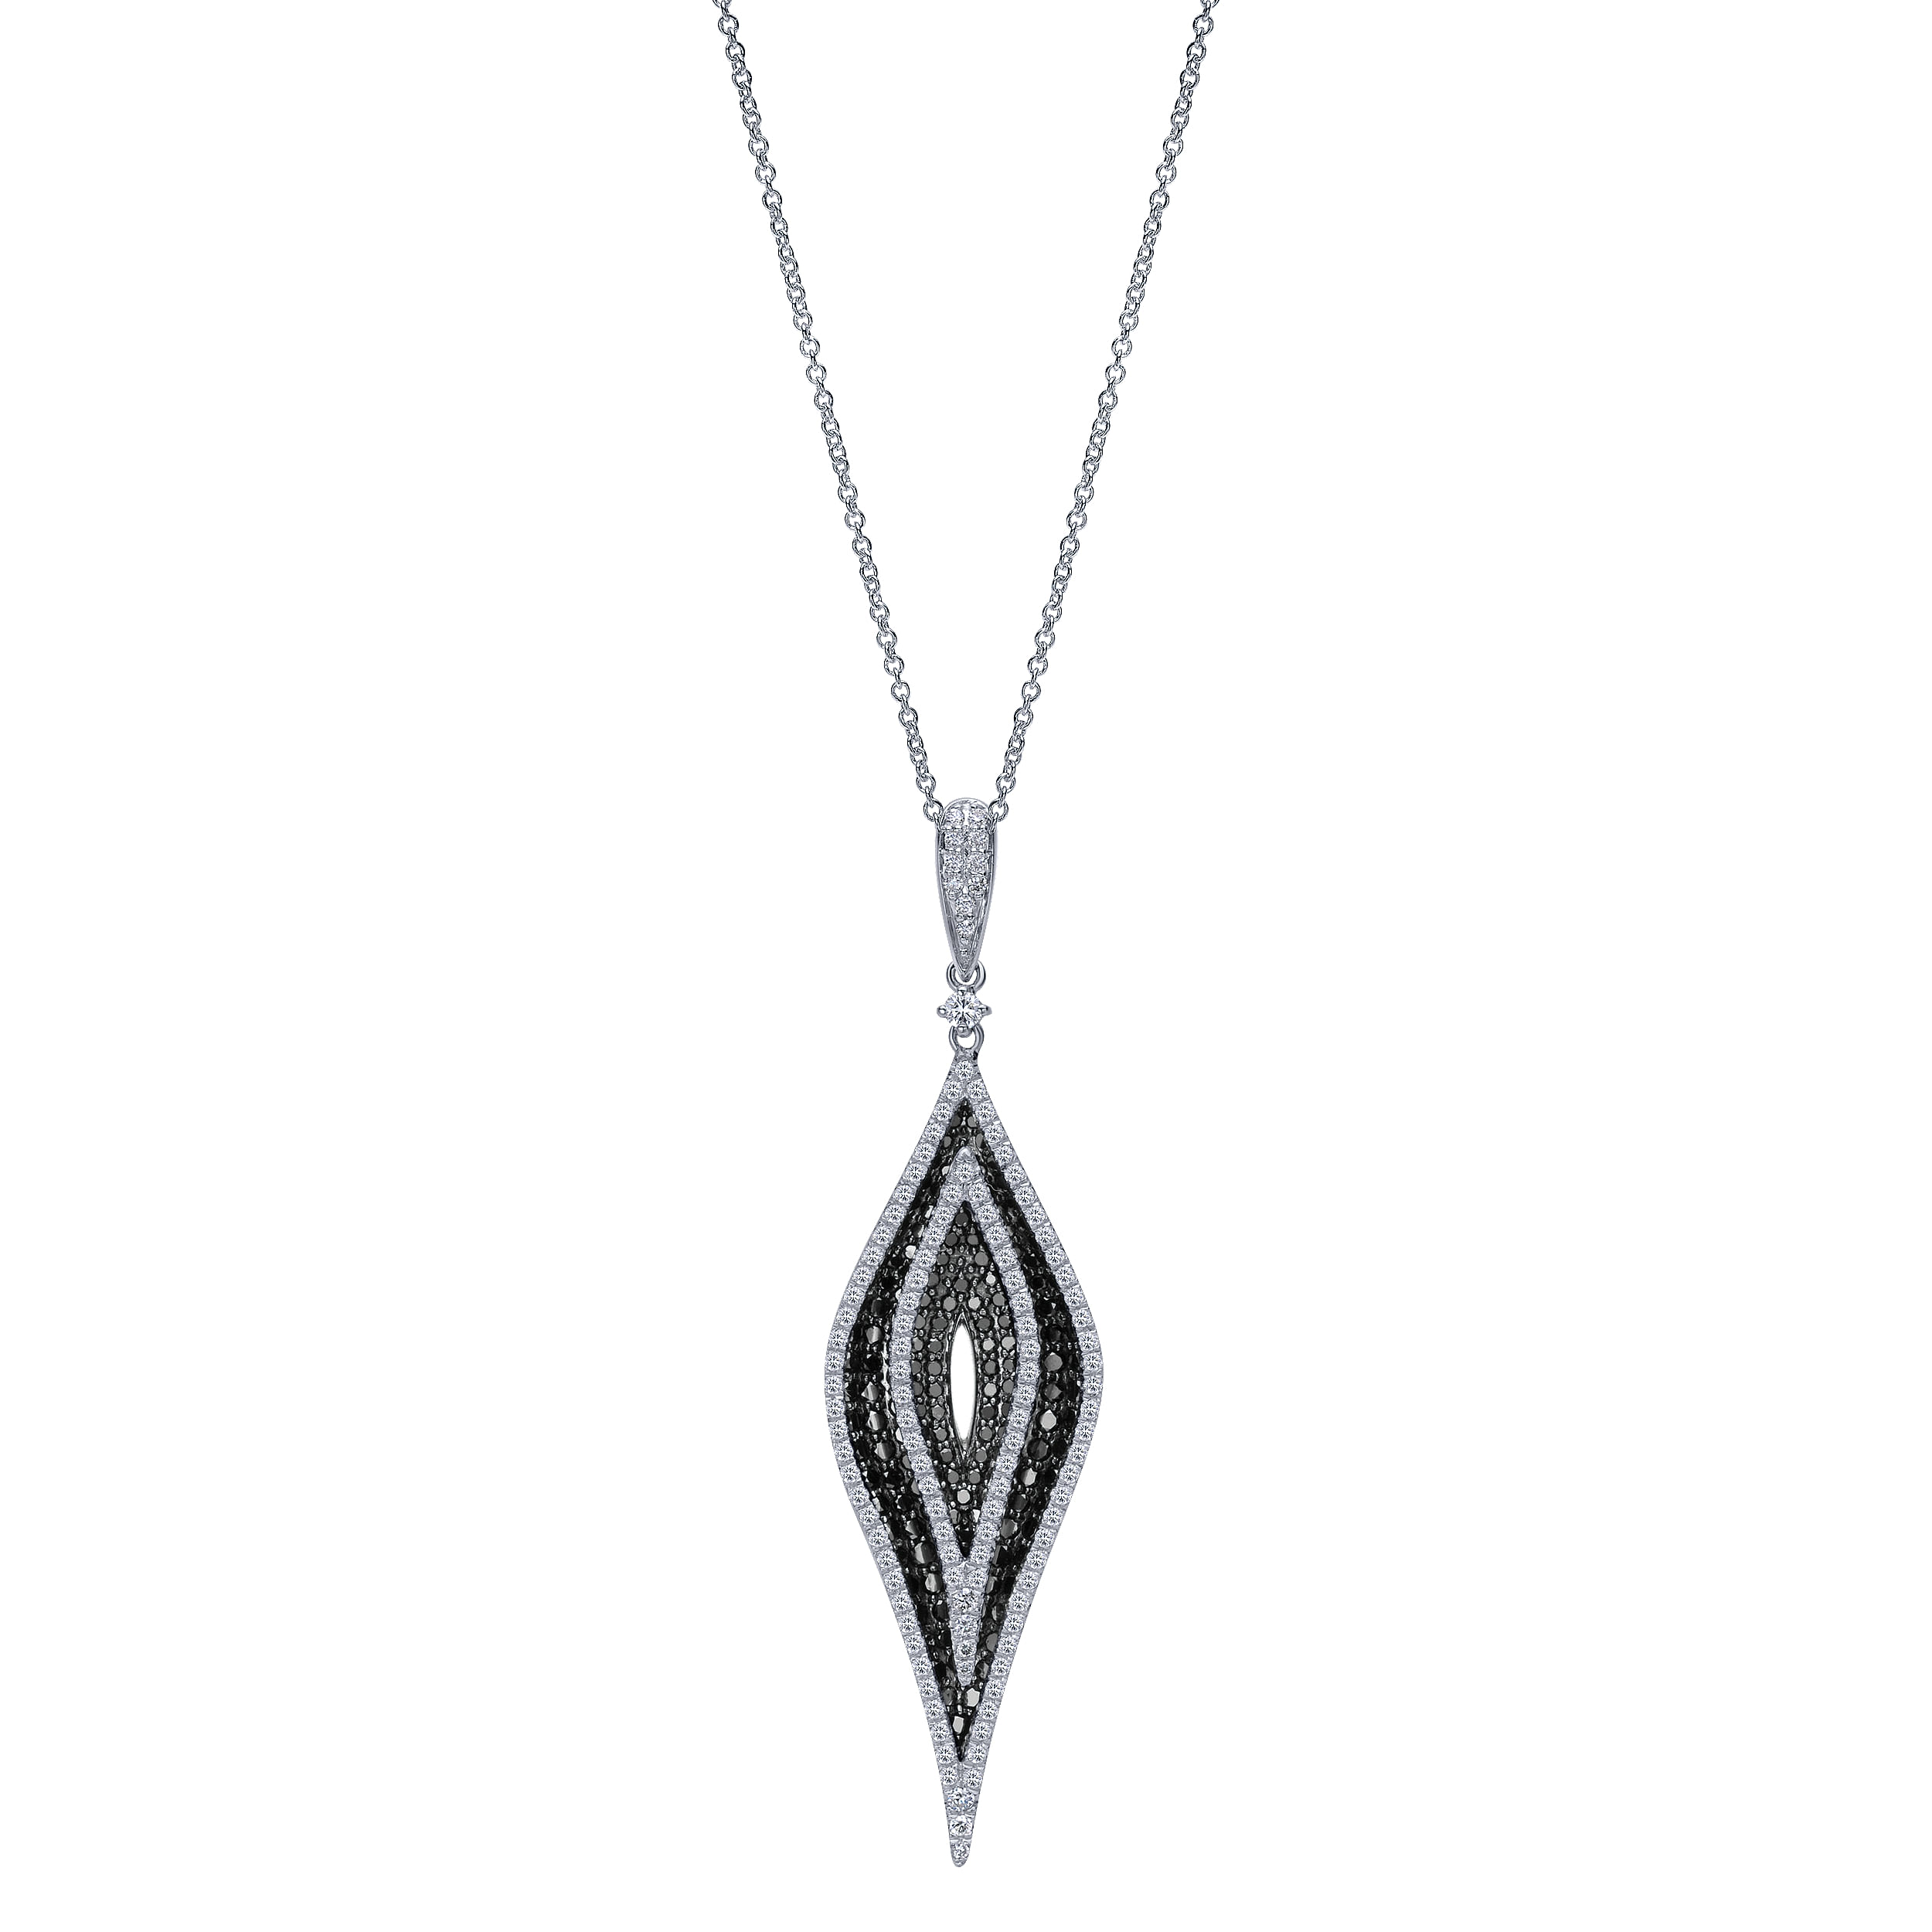 18 inch 18K White Gold Elongated White and Black Diamond Pendant Necklace